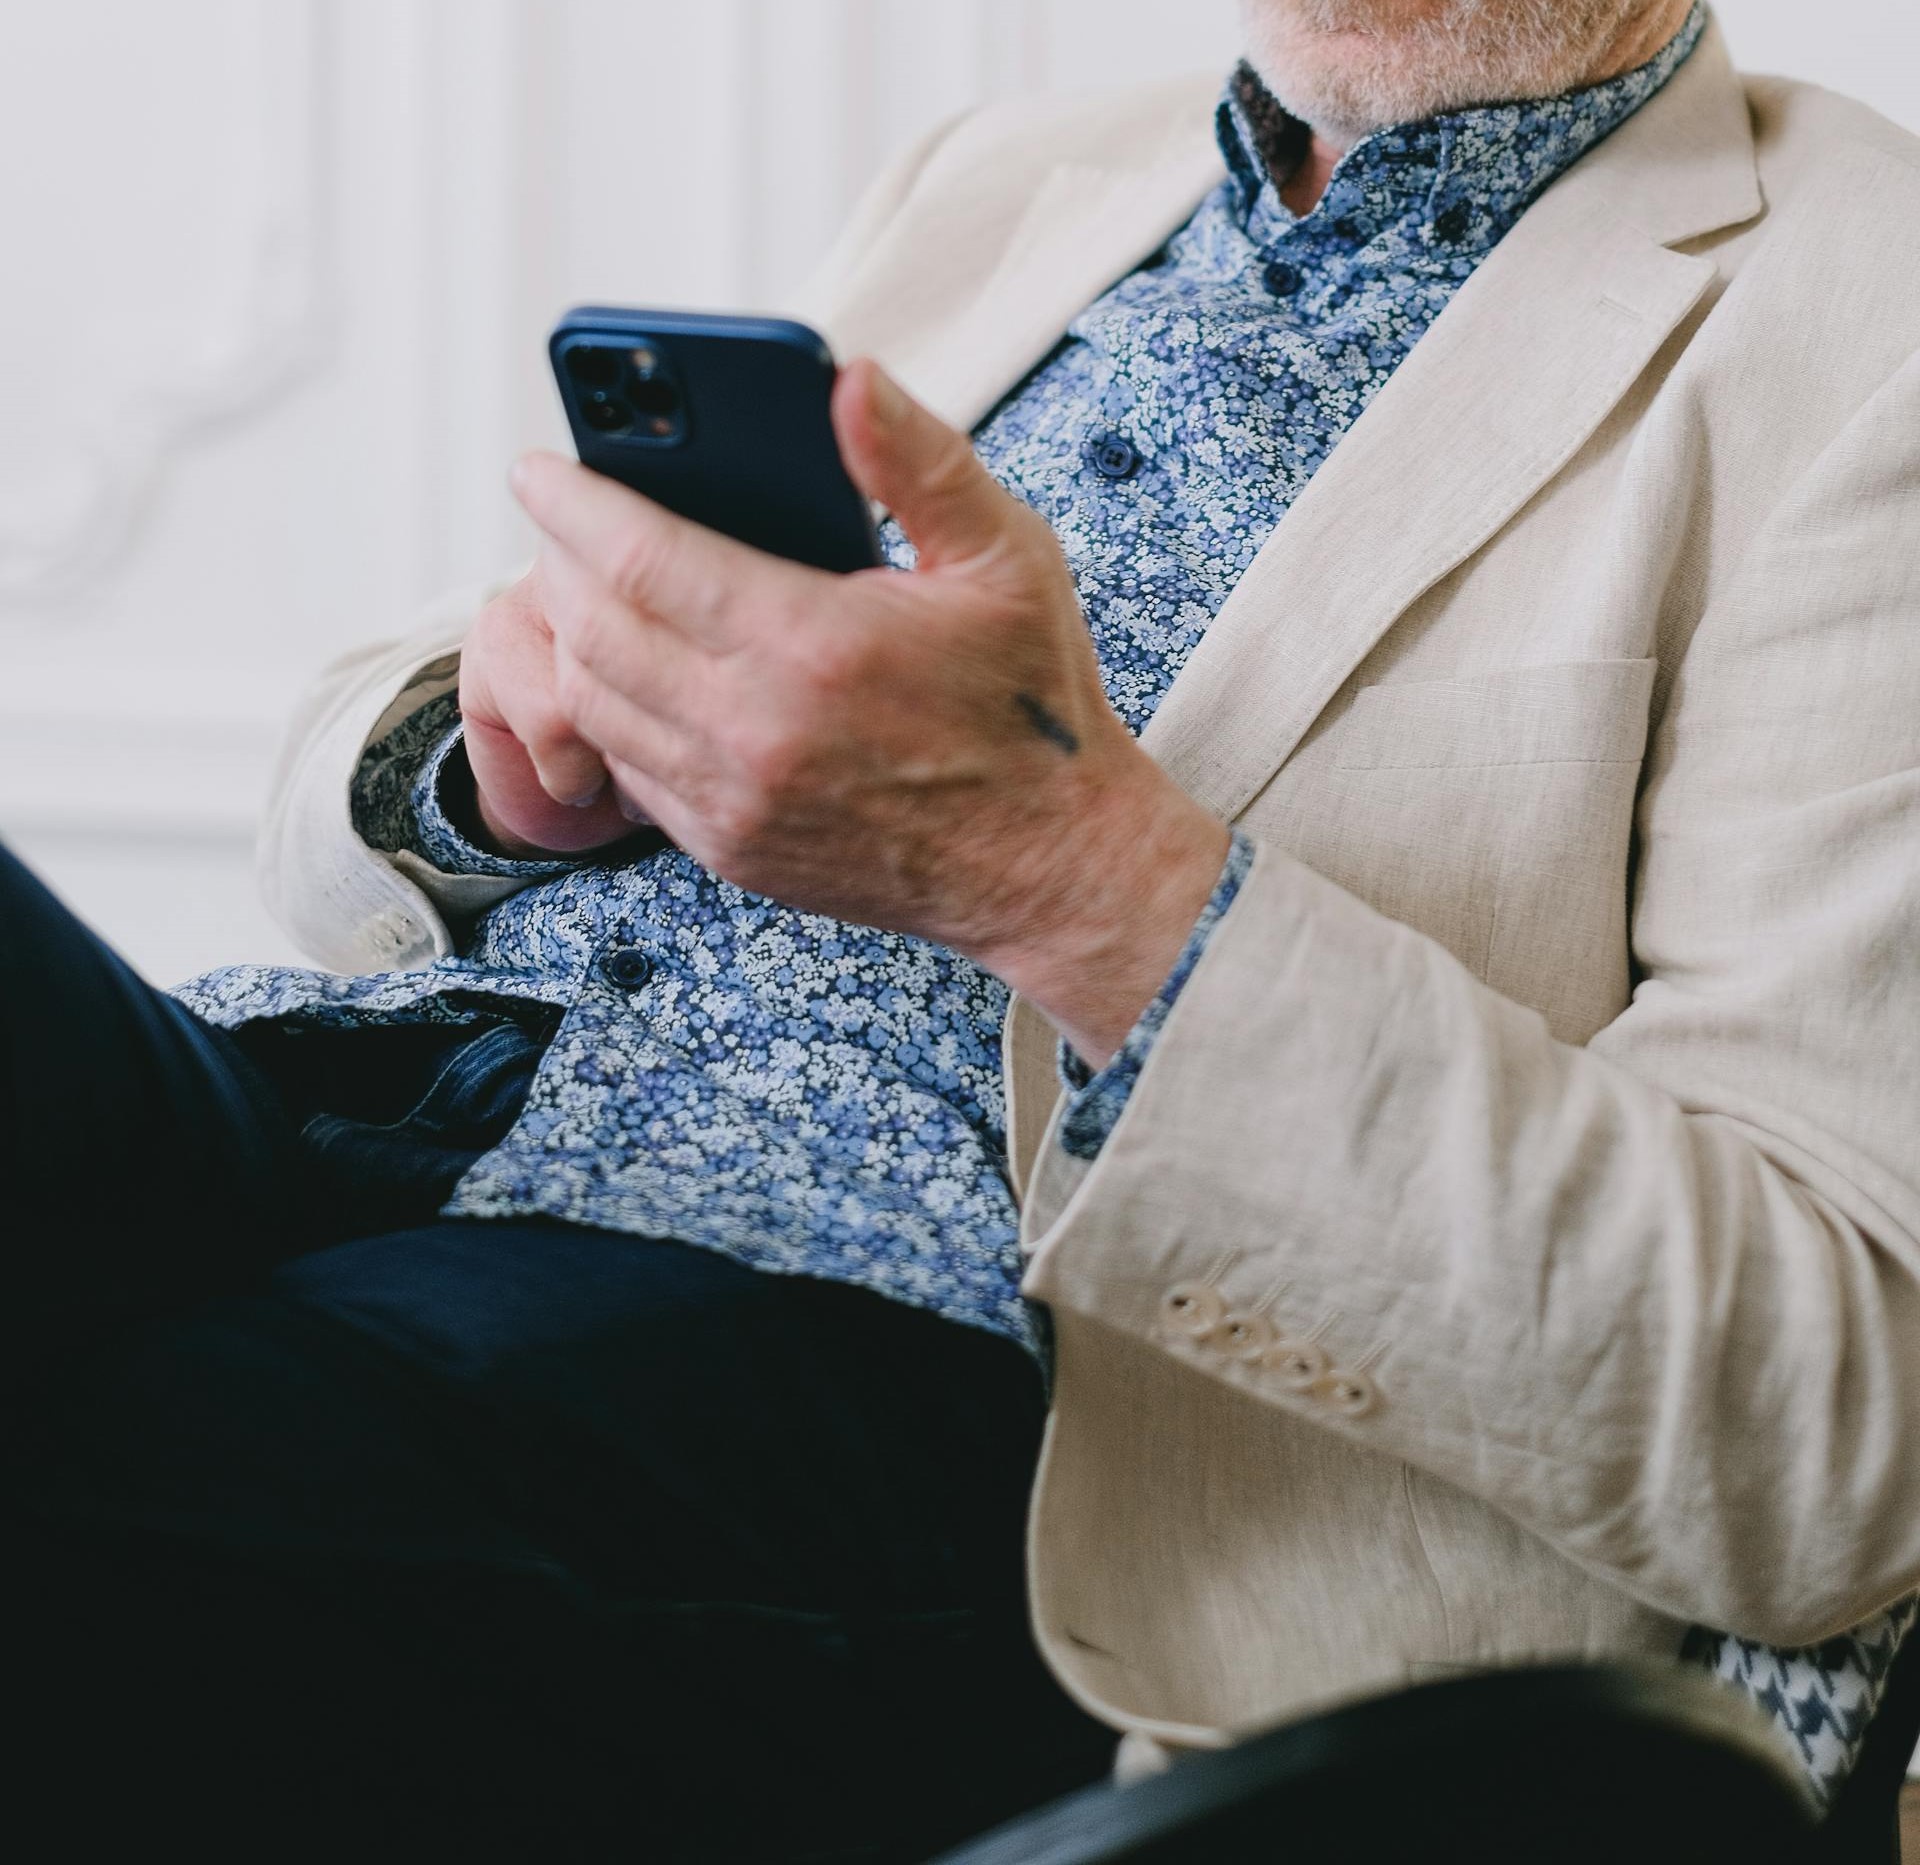 A mature man holding a smartphone | Source: Pexels